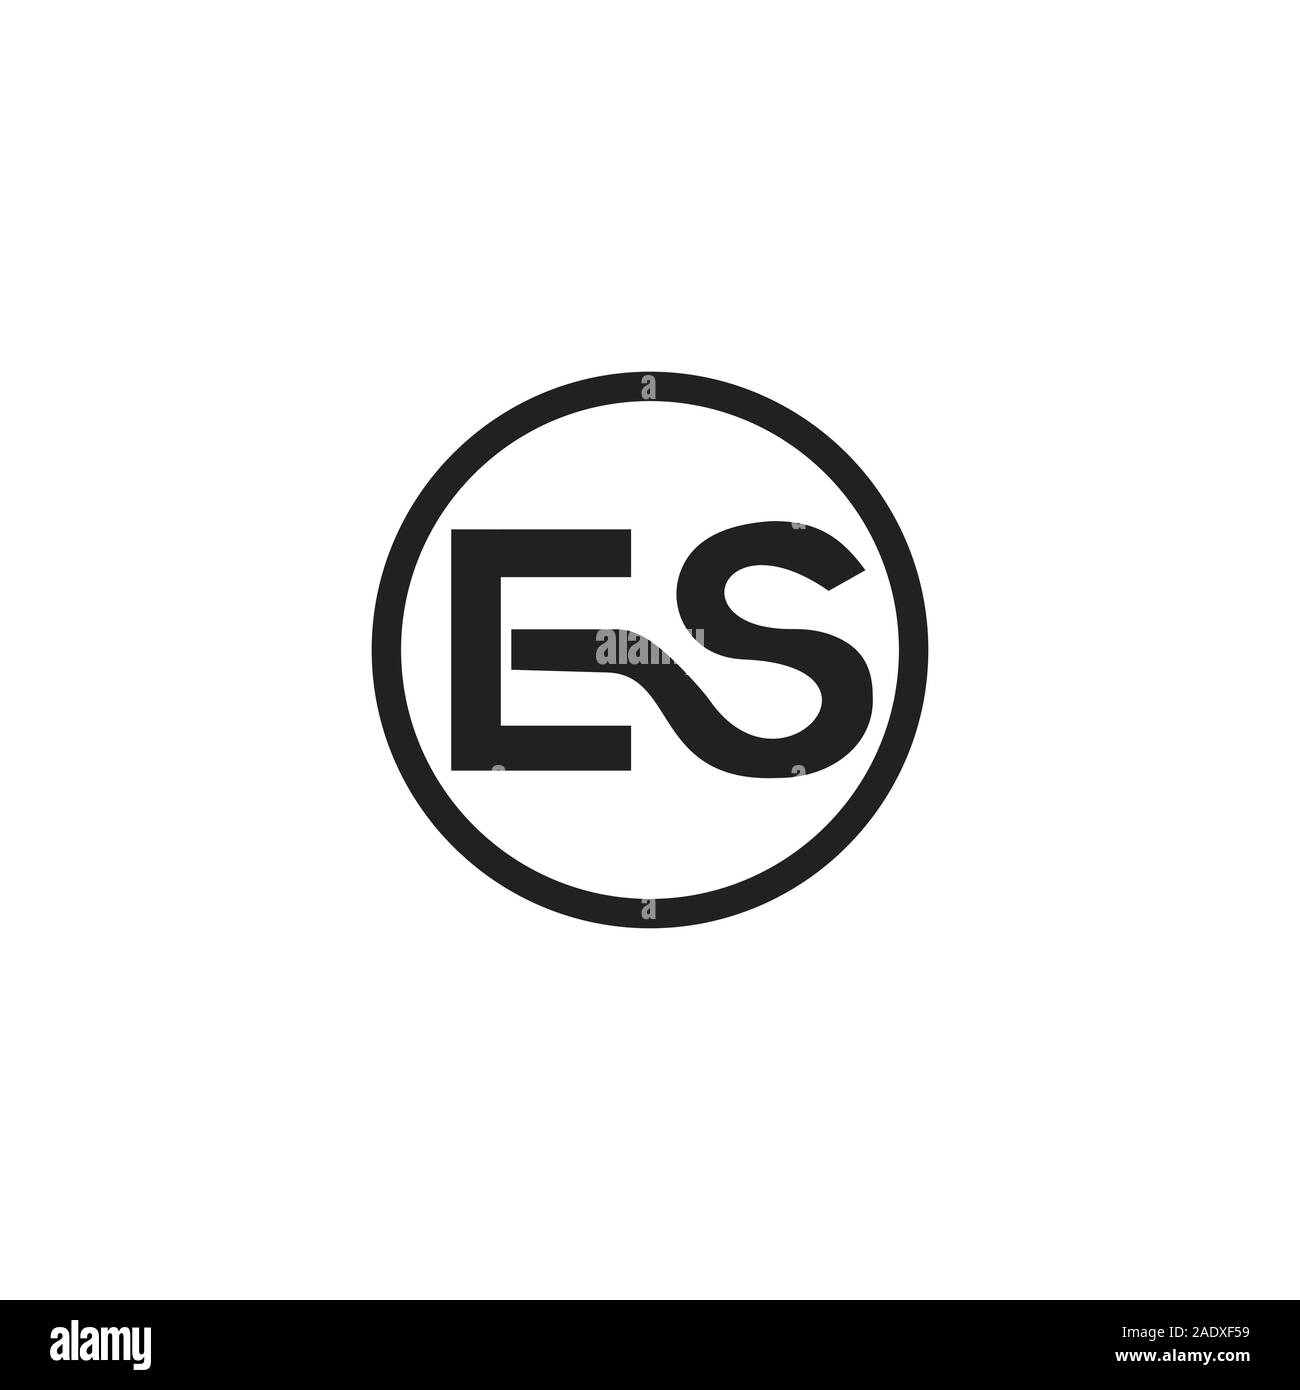 initial letter es or se logo vector logo design Stock Vector